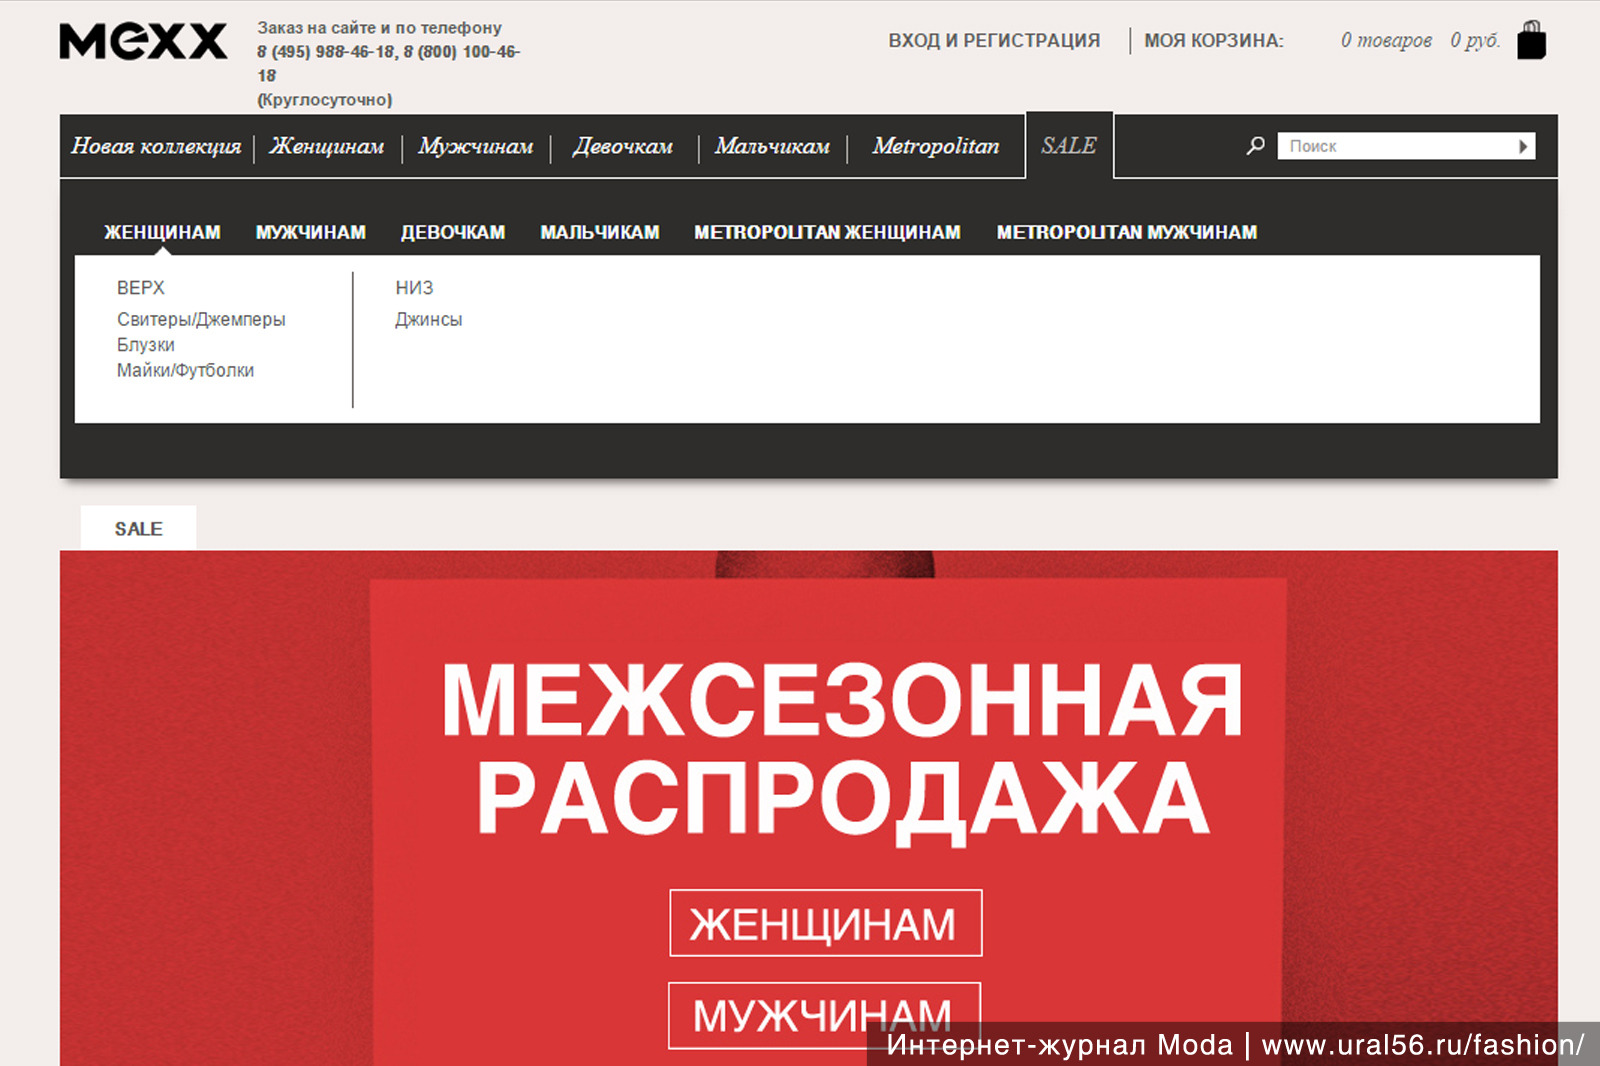 Сайт оренбургского магазина МЕХХ